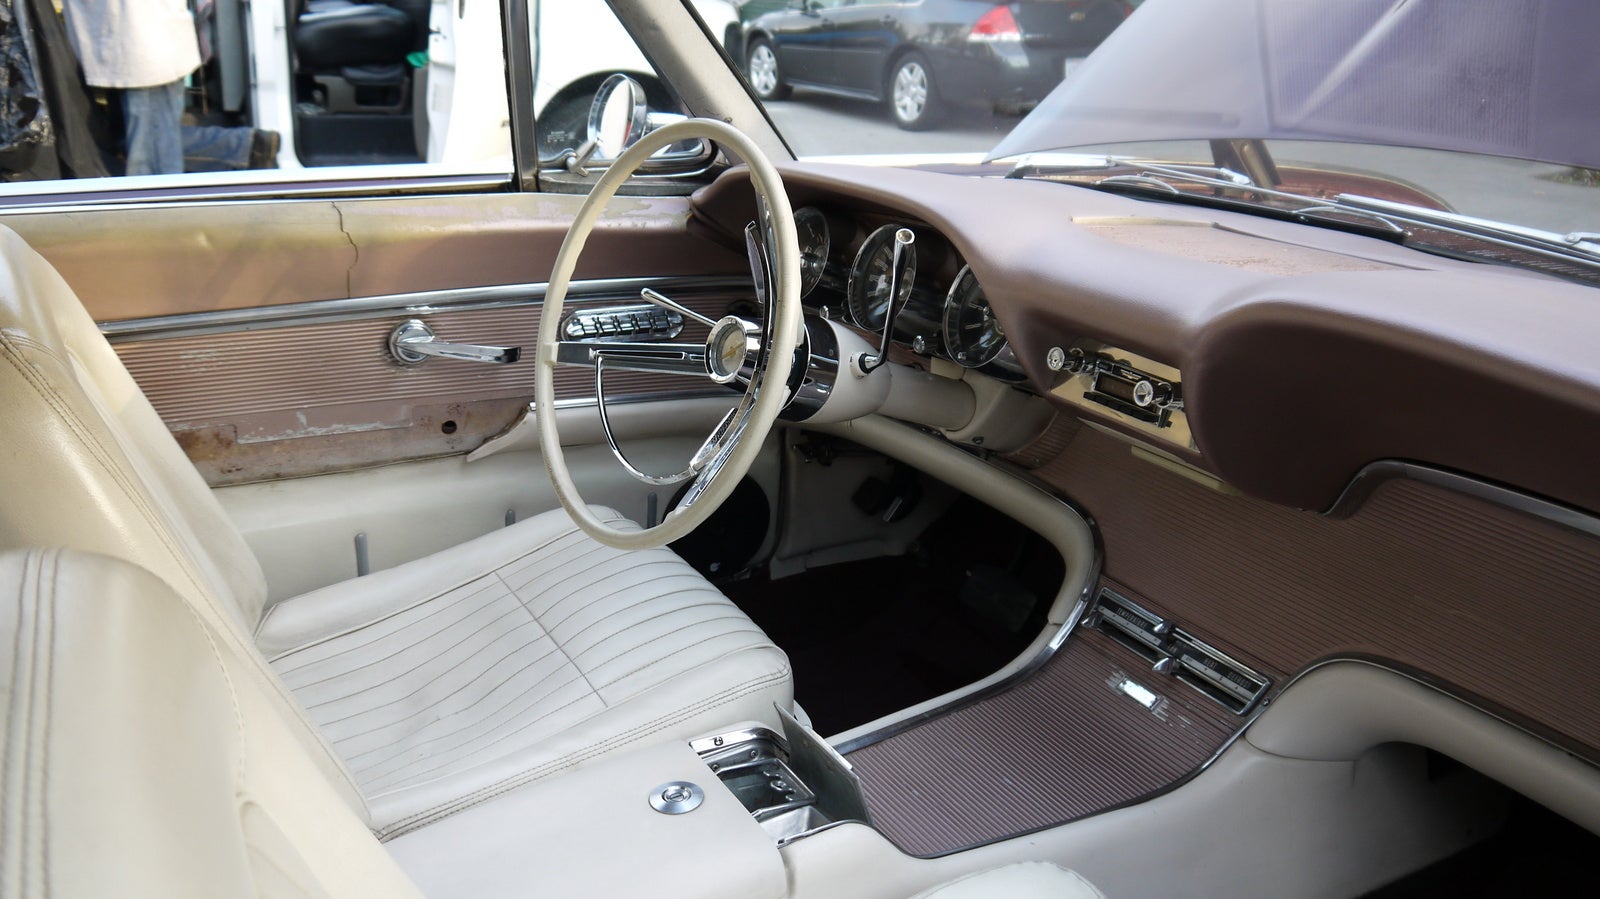 1962 Ford thunderbird interior colors #1